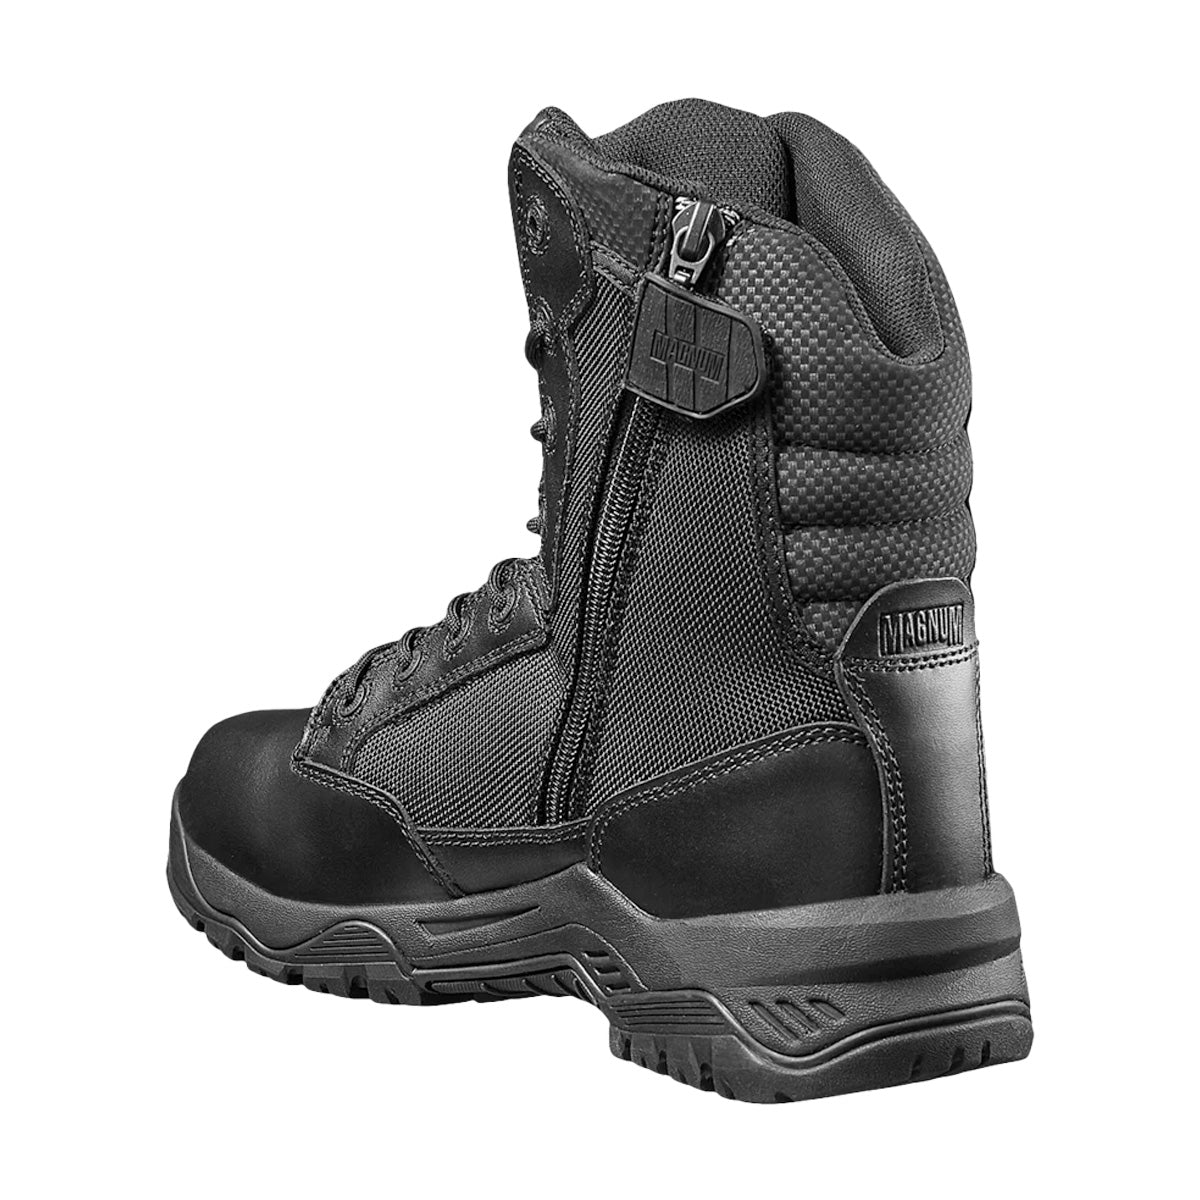 Magnum Strike Force 8.0 Side-Zip Composite Toe Boots Black Footwear Magnum Footwear Tactical Gear Supplier Tactical Distributors Australia